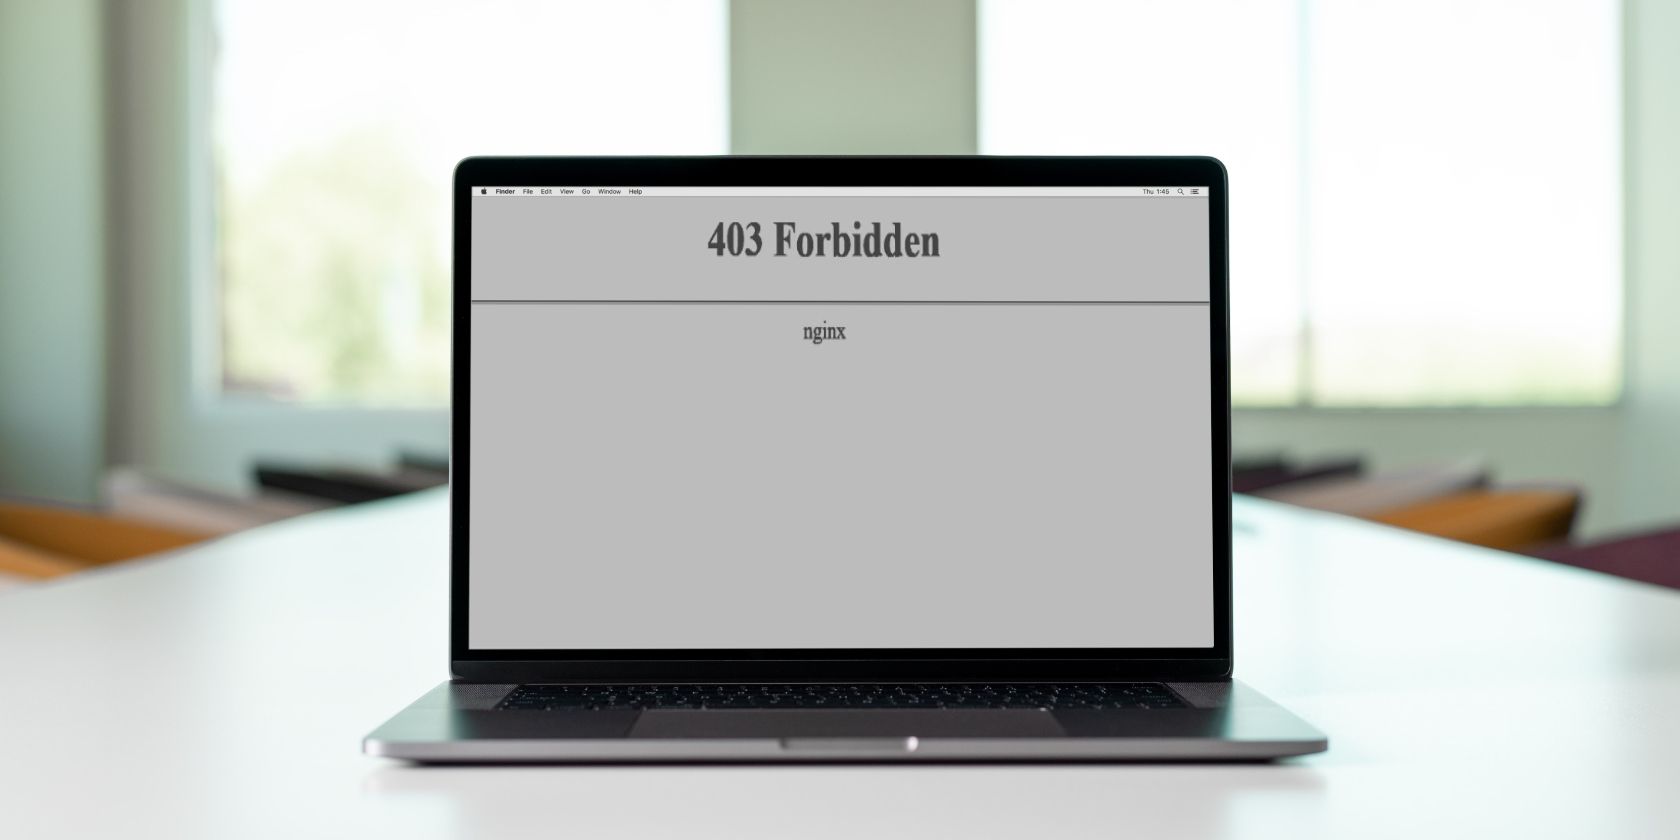 403 Forbidden error message on a laptop